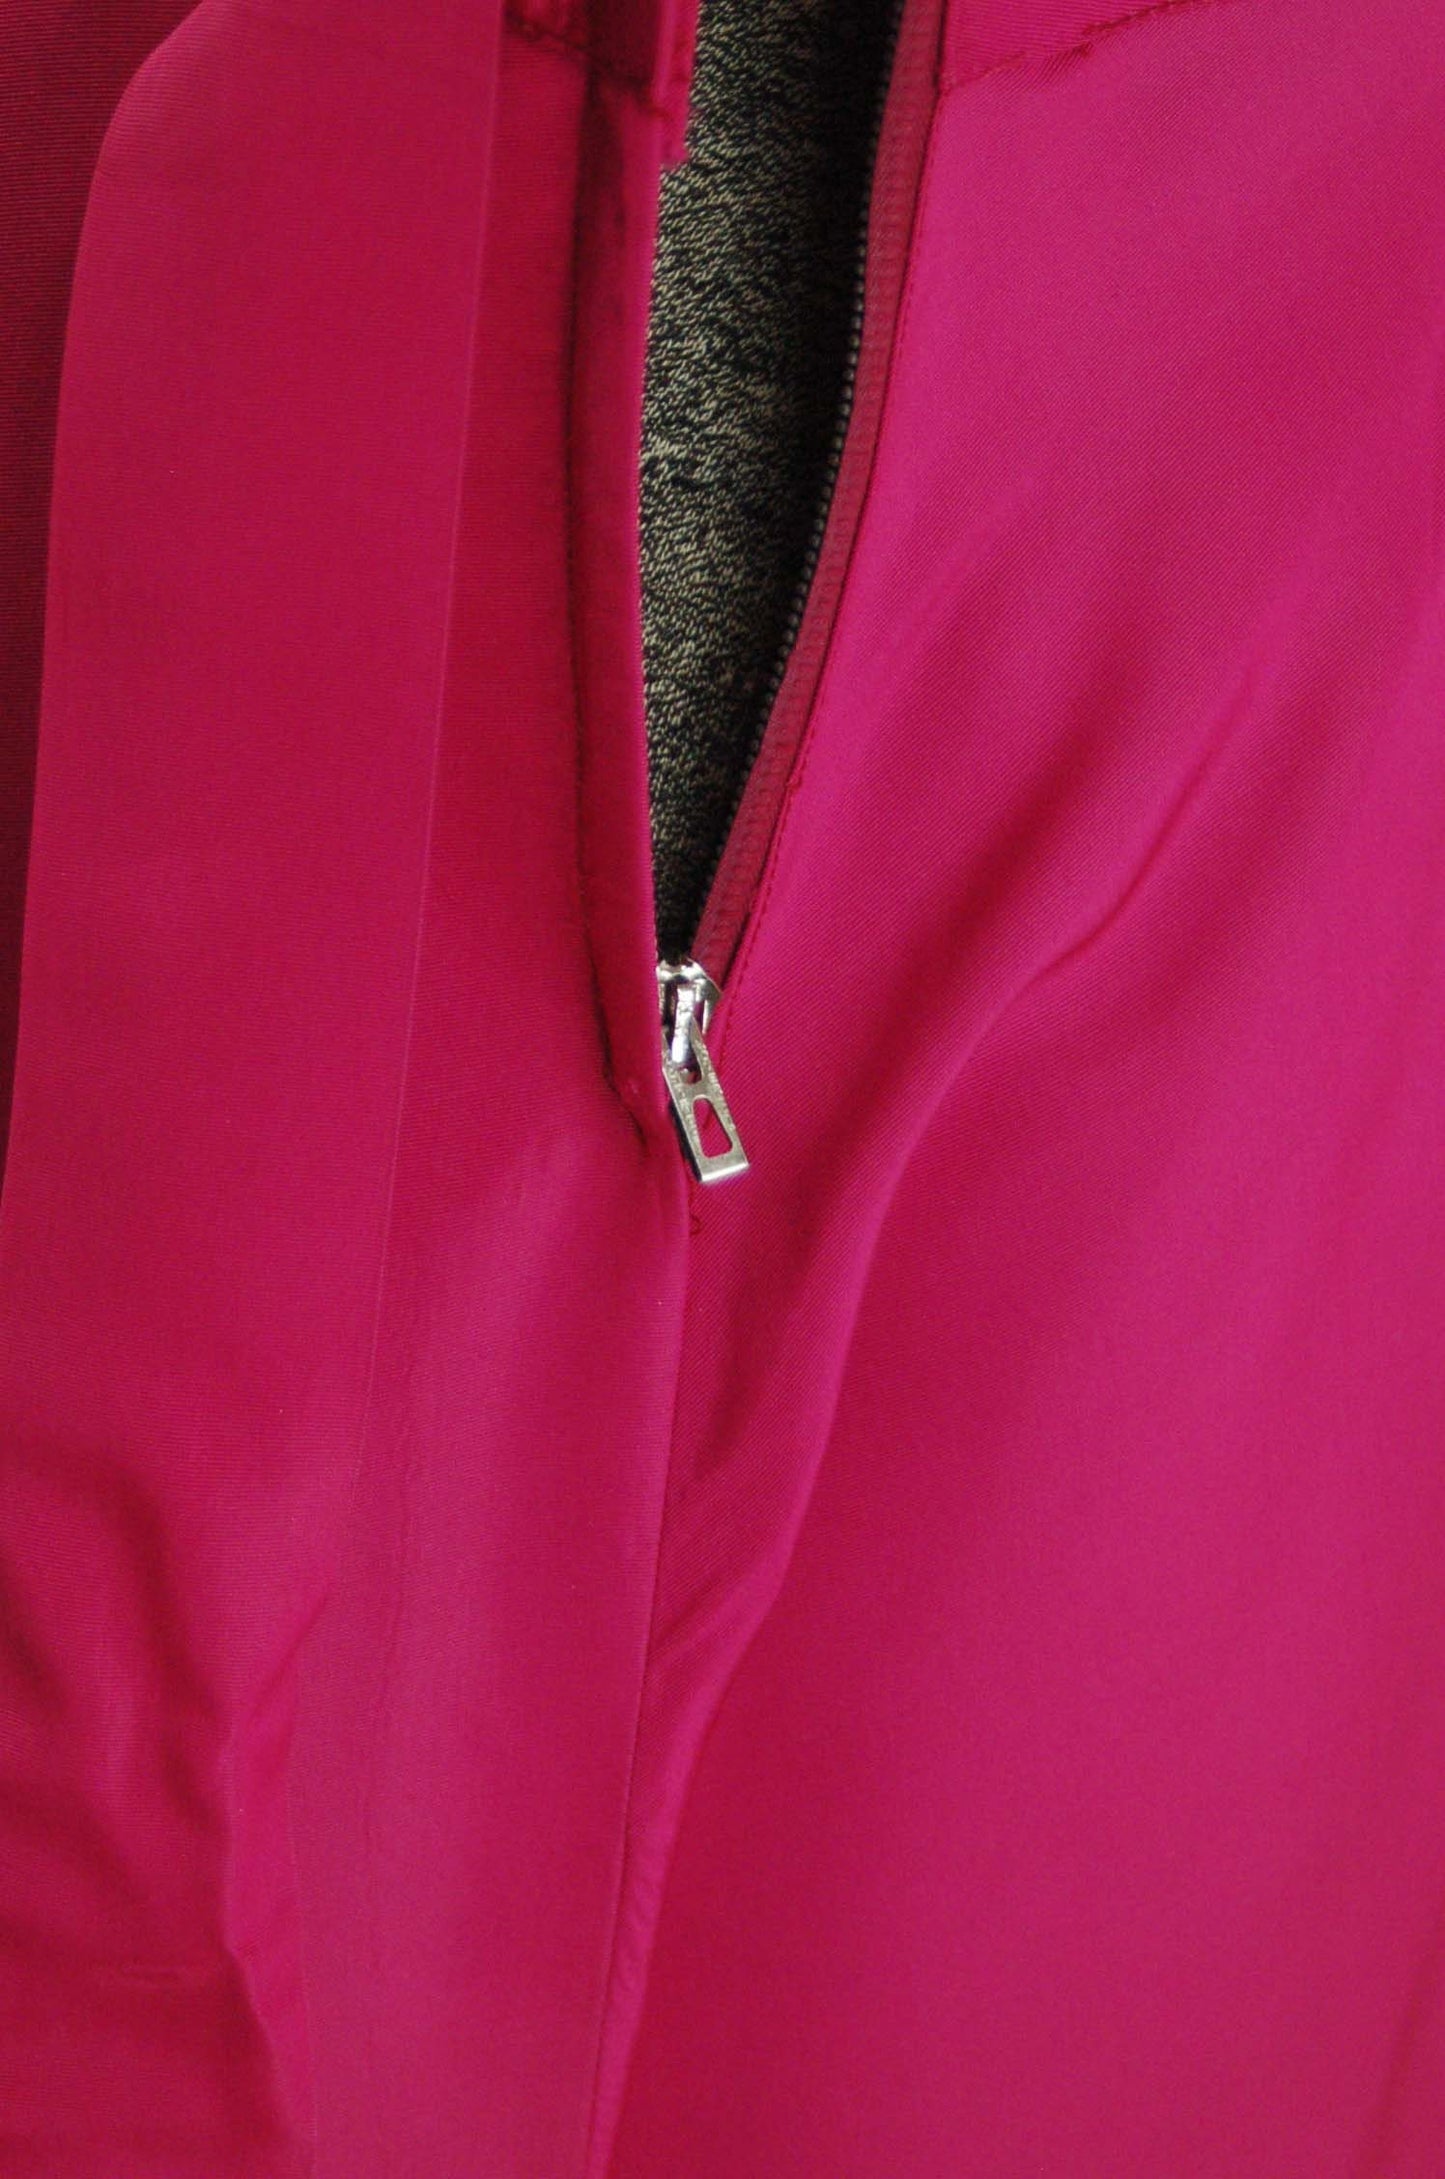 1940s gown bias cut fuchsia taffeta dress ruched bodice rhinestone trim Size S/M